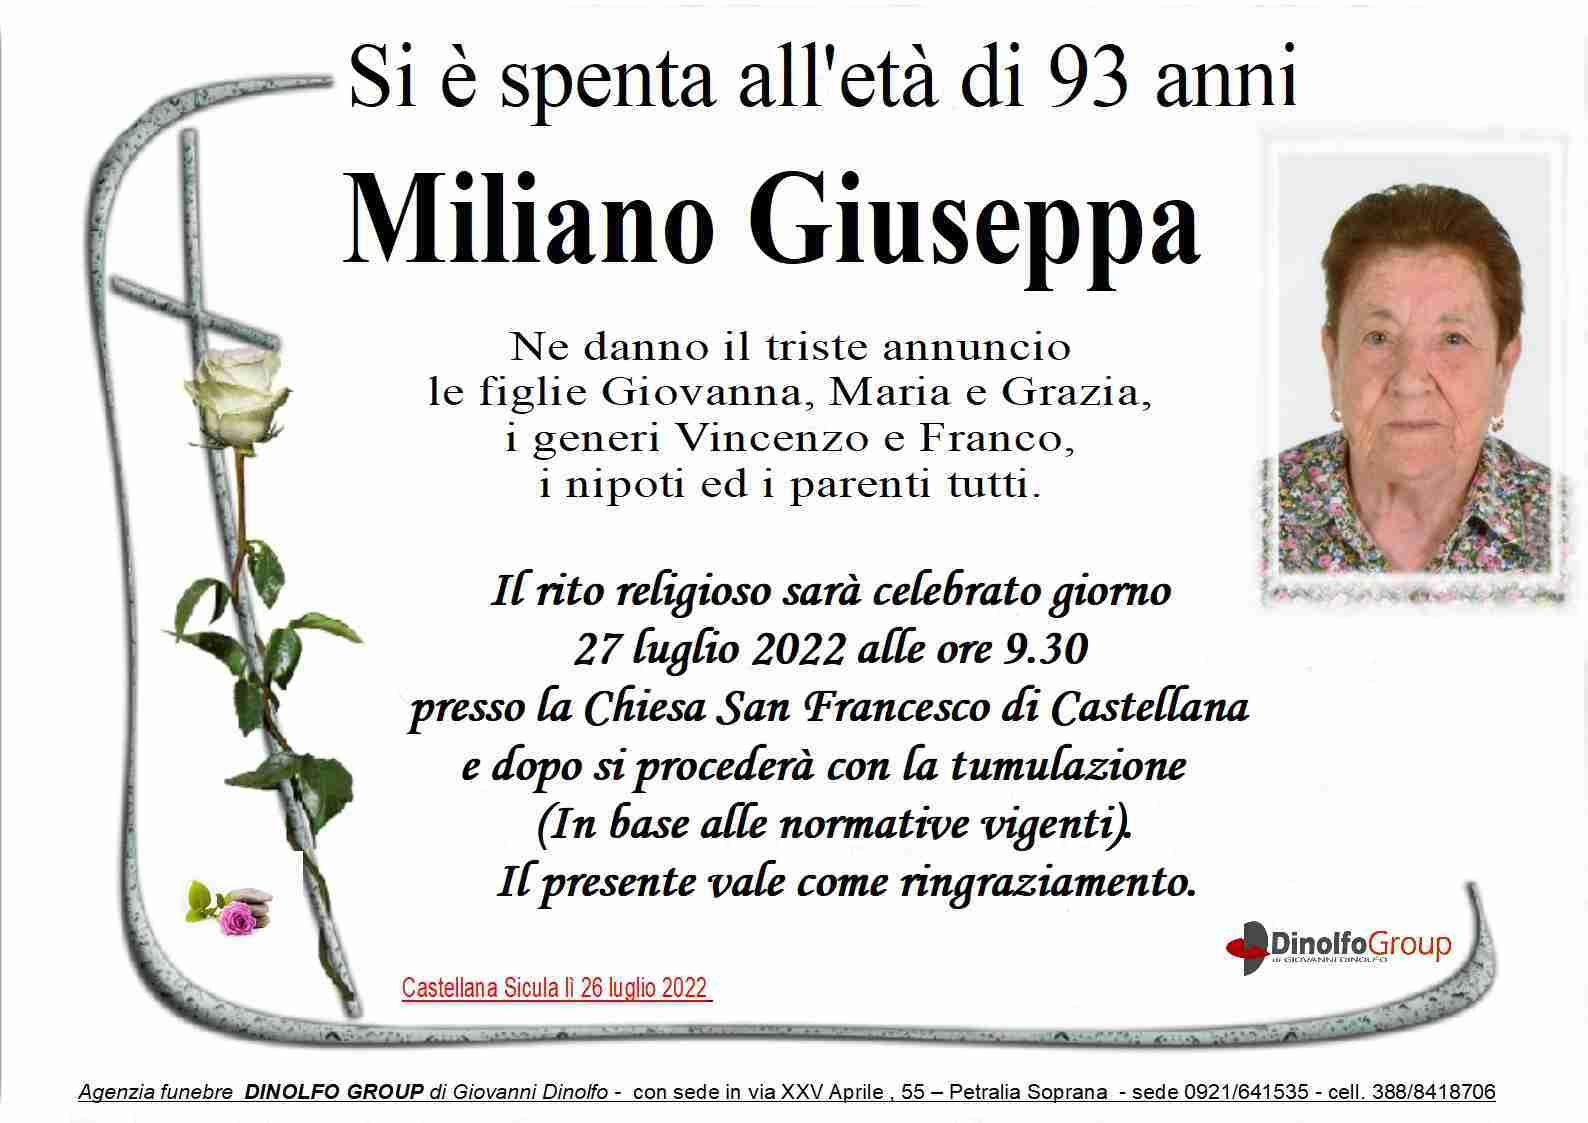 Giuseppa Miliano